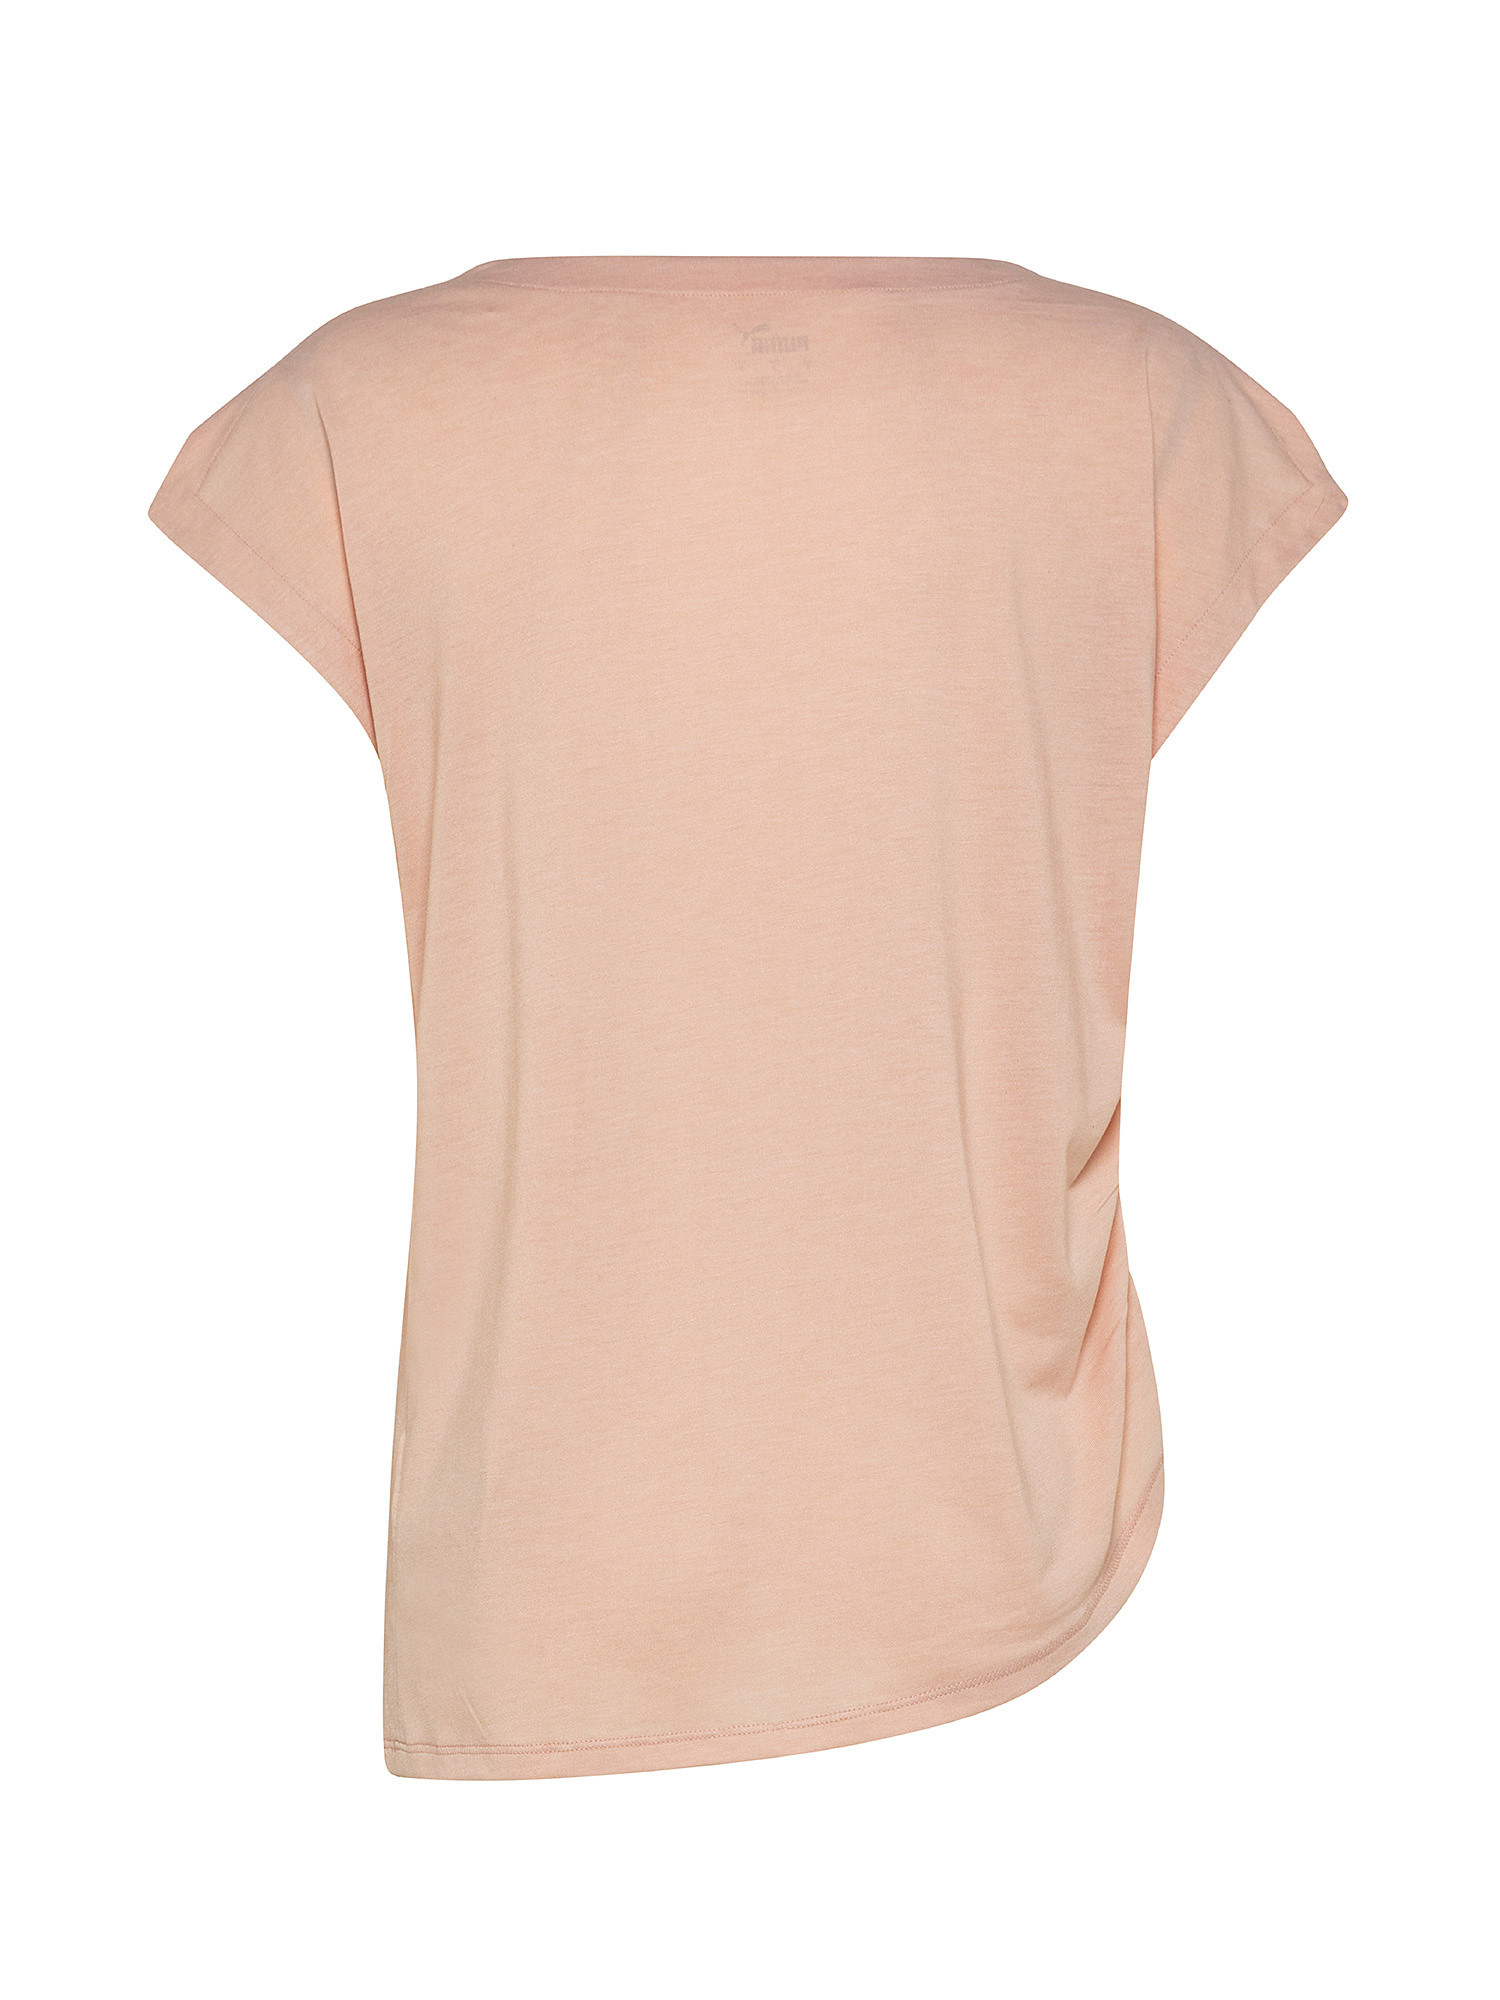 Asymmetrical T-shirt, Light Pink, large image number 1